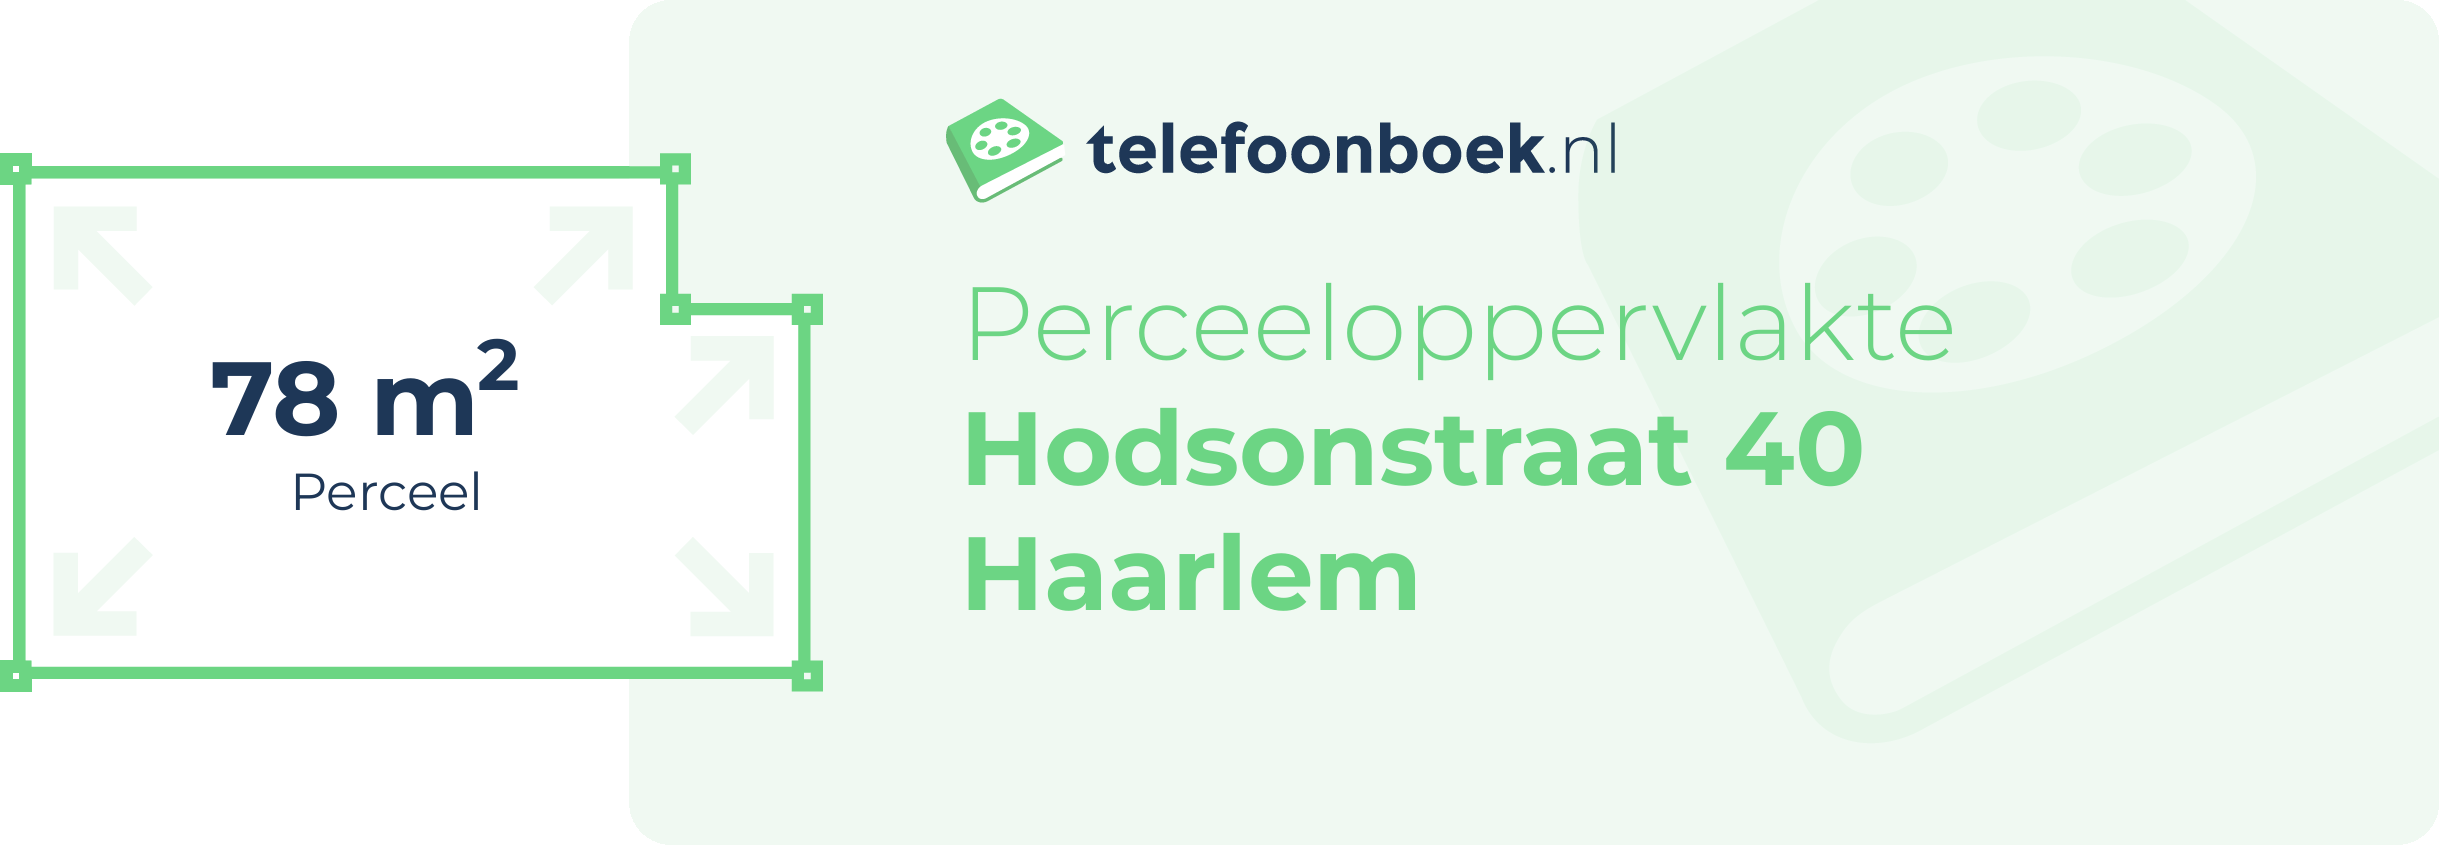 Perceeloppervlakte Hodsonstraat 40 Haarlem